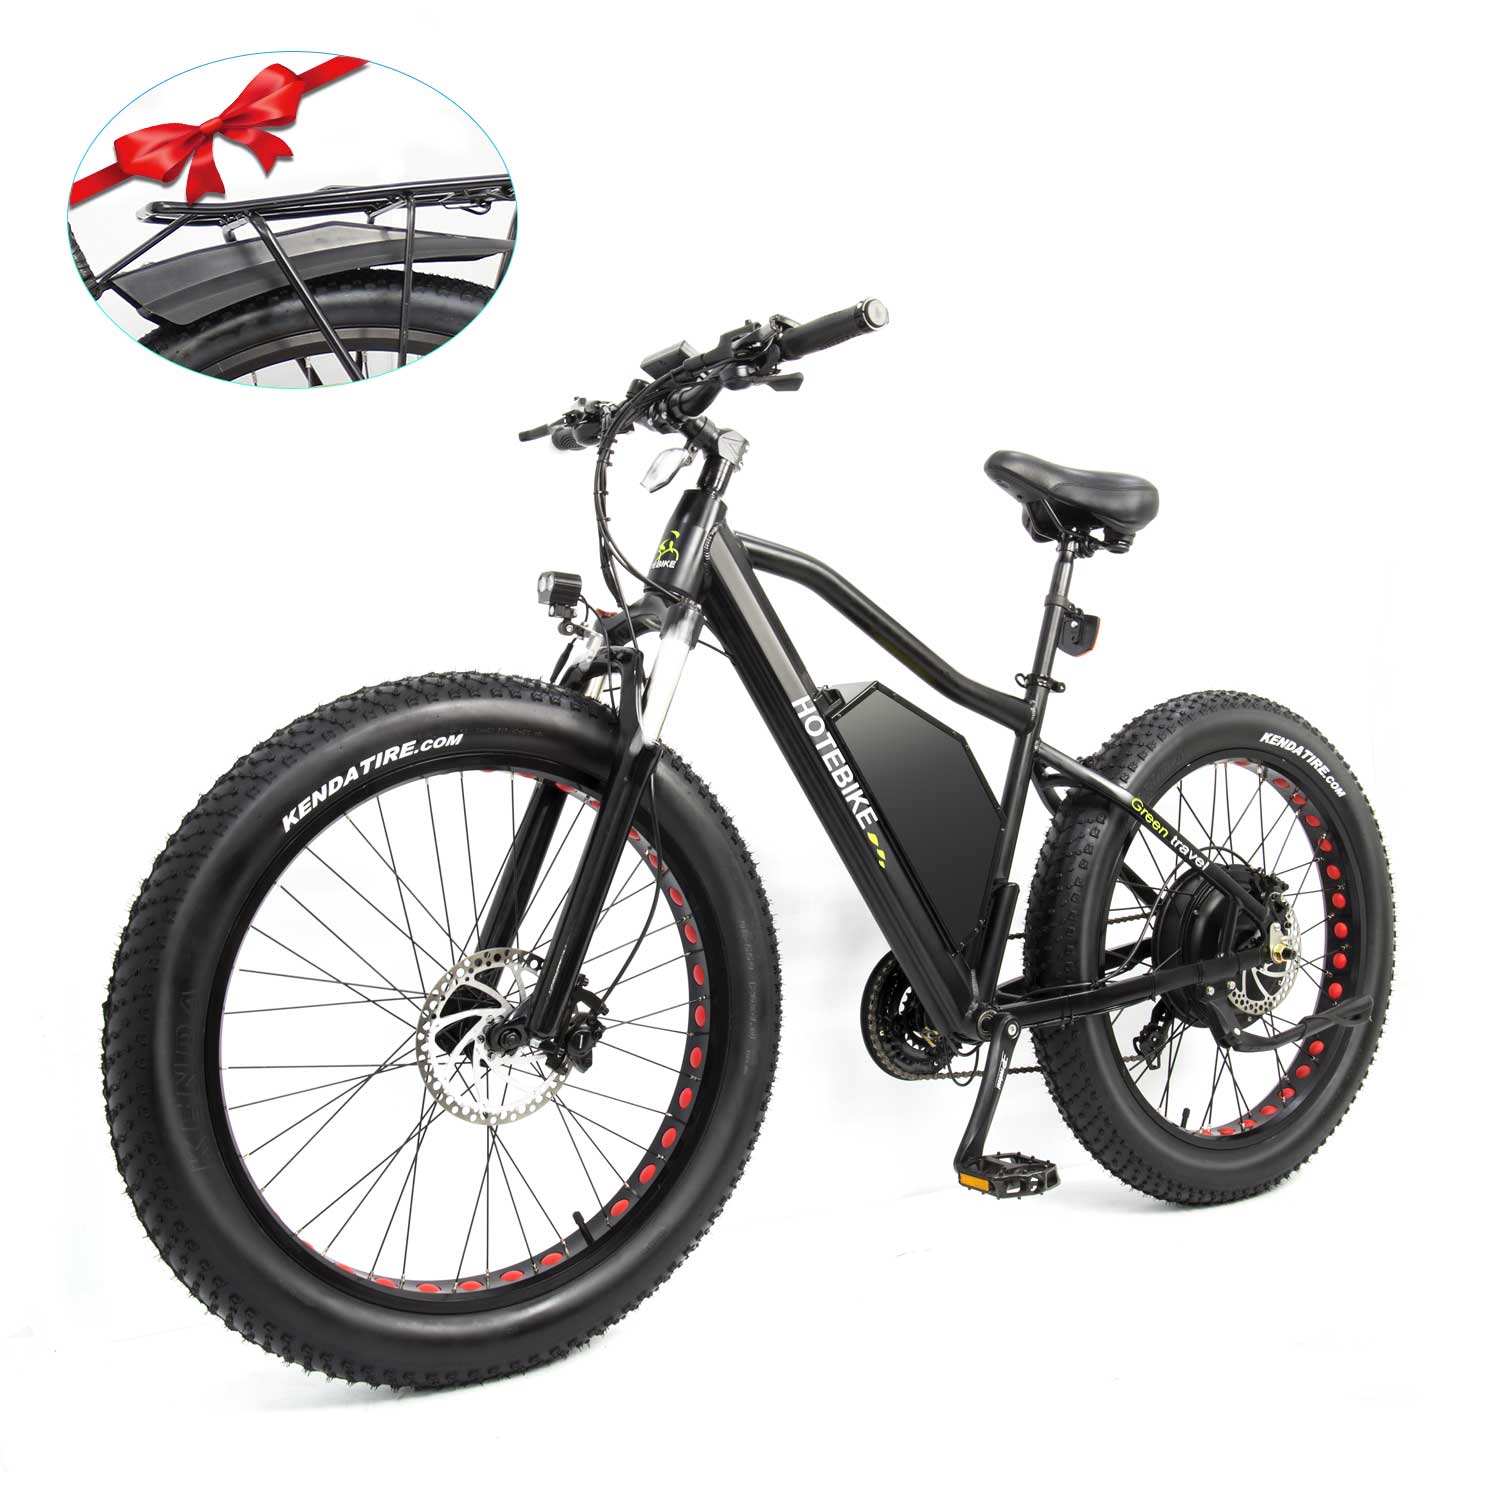 60V 2000W Fat Tire Electric Bike Max Speed 55KM/H Snow Beach Bike 18AH Battery